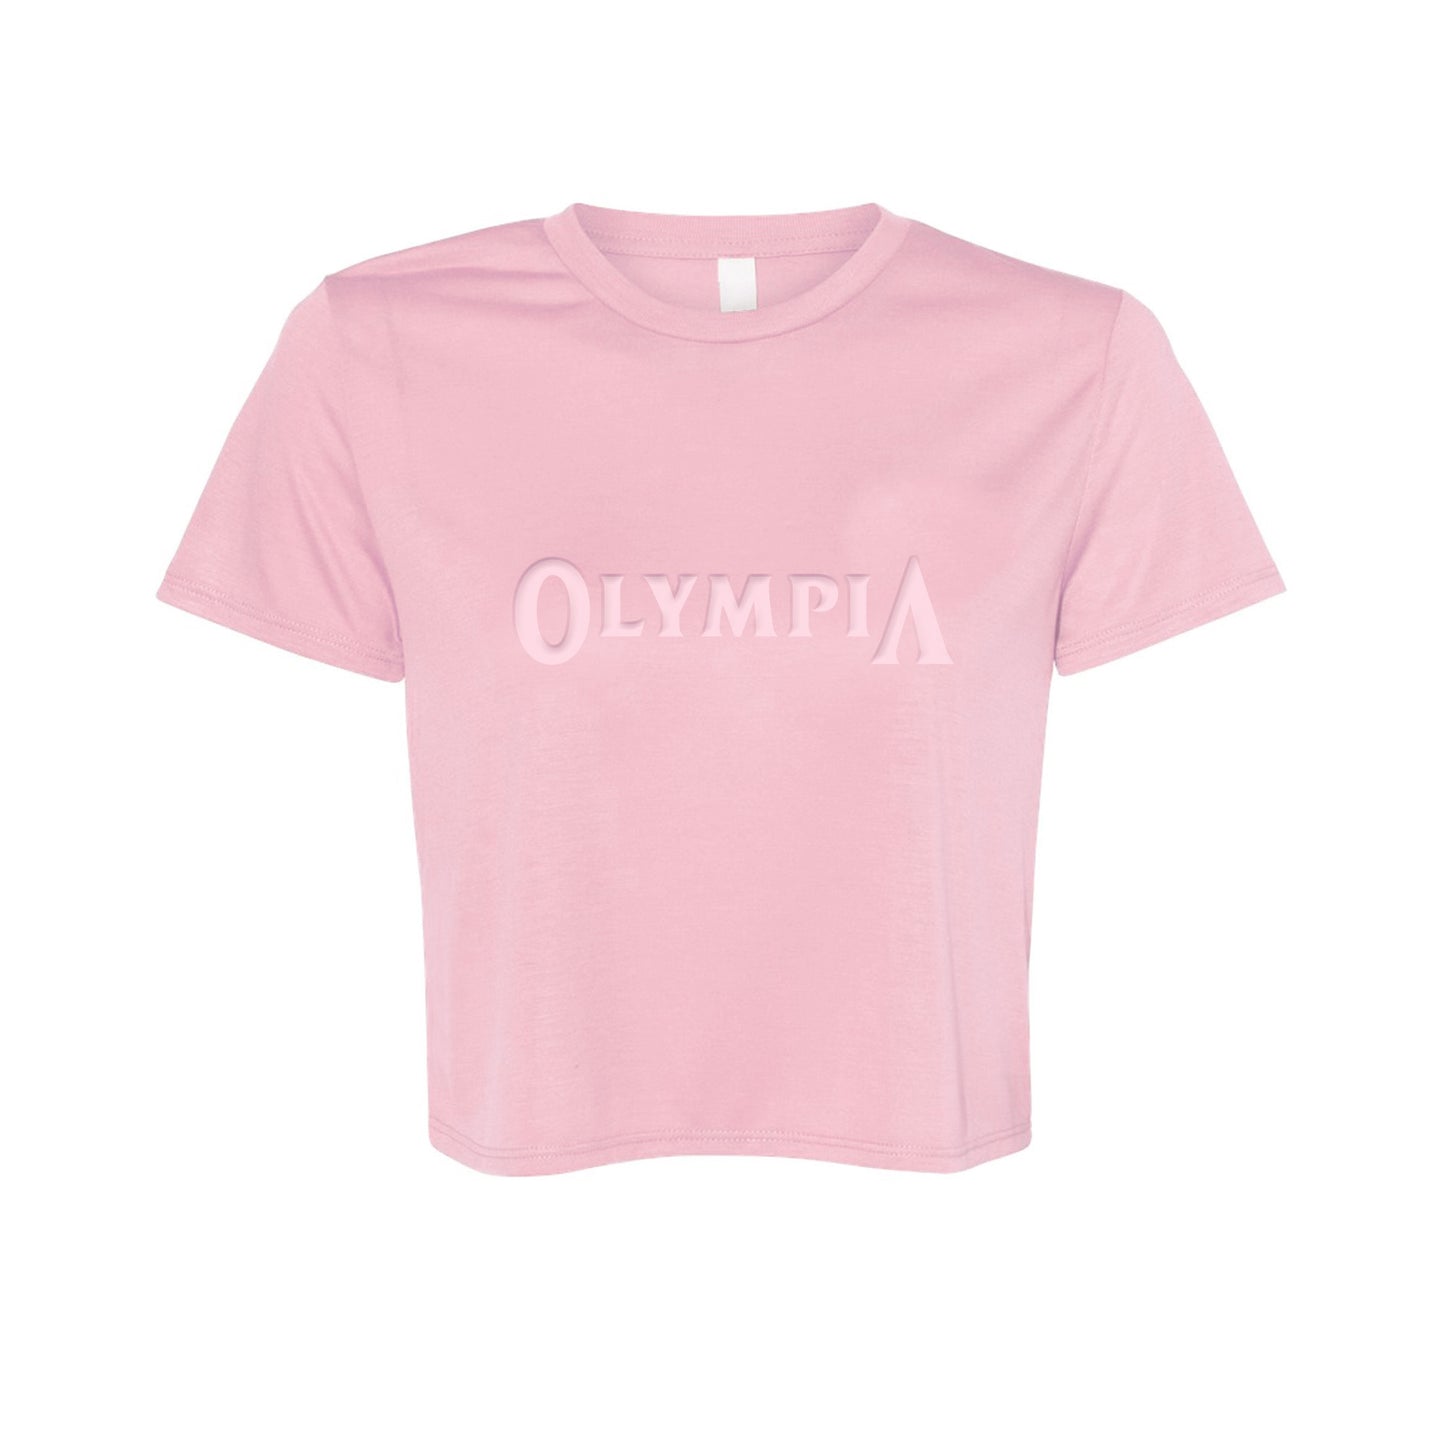 Olympia Emboss Crop Tee Pink